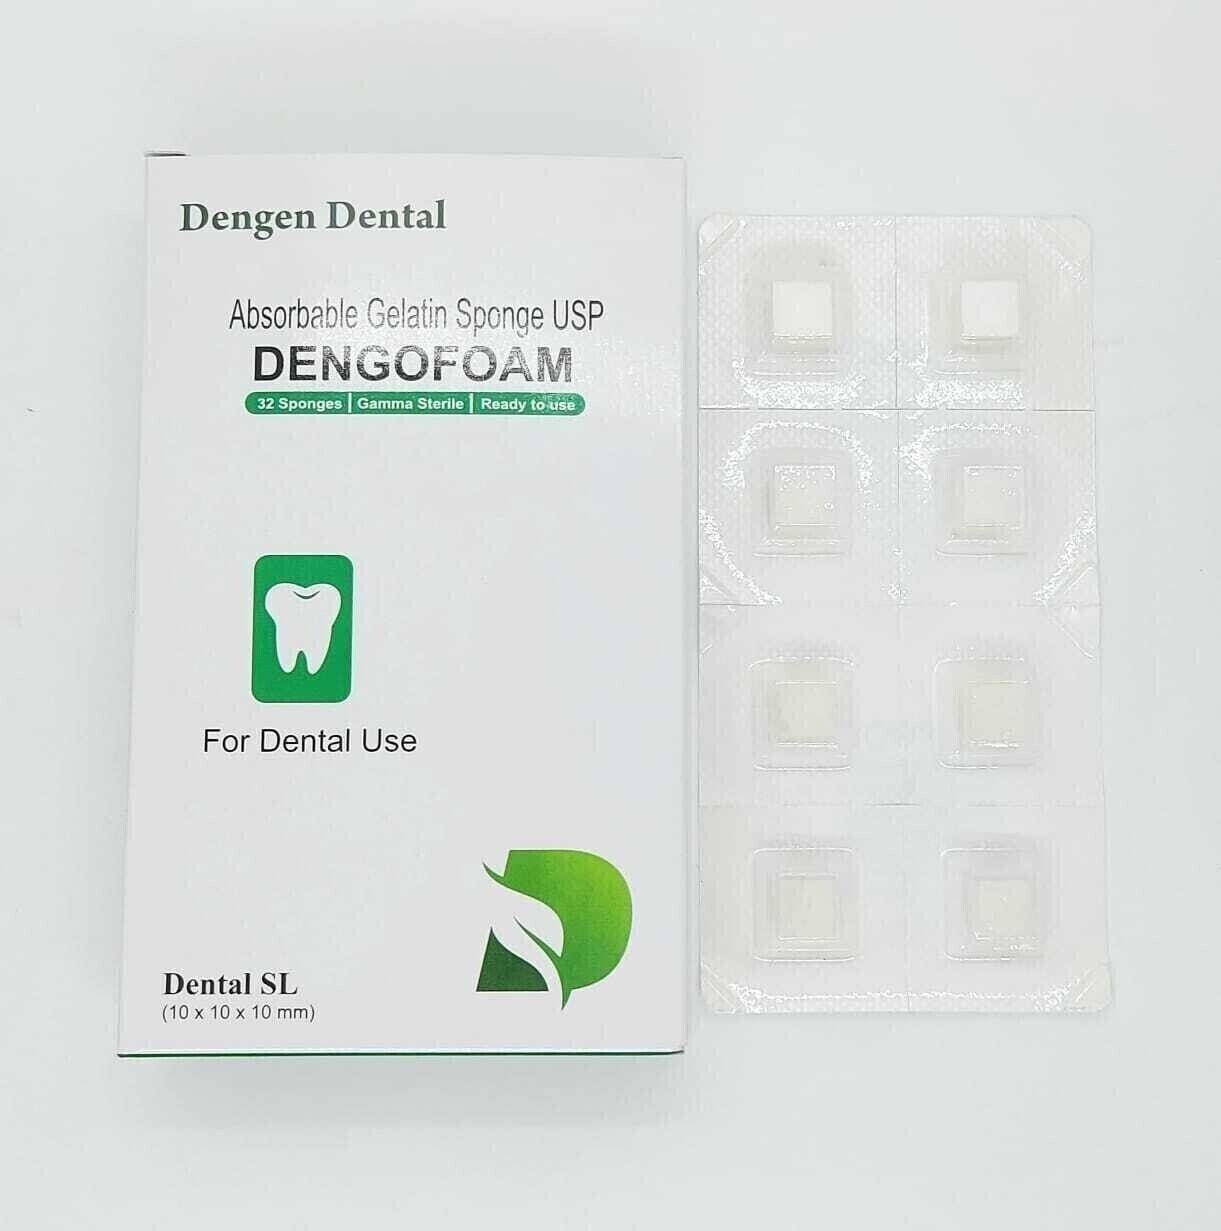 5 X Dengen Dental Sterile Gelatine Hemostatic Sponge Gelfoam Cubes 32pcs